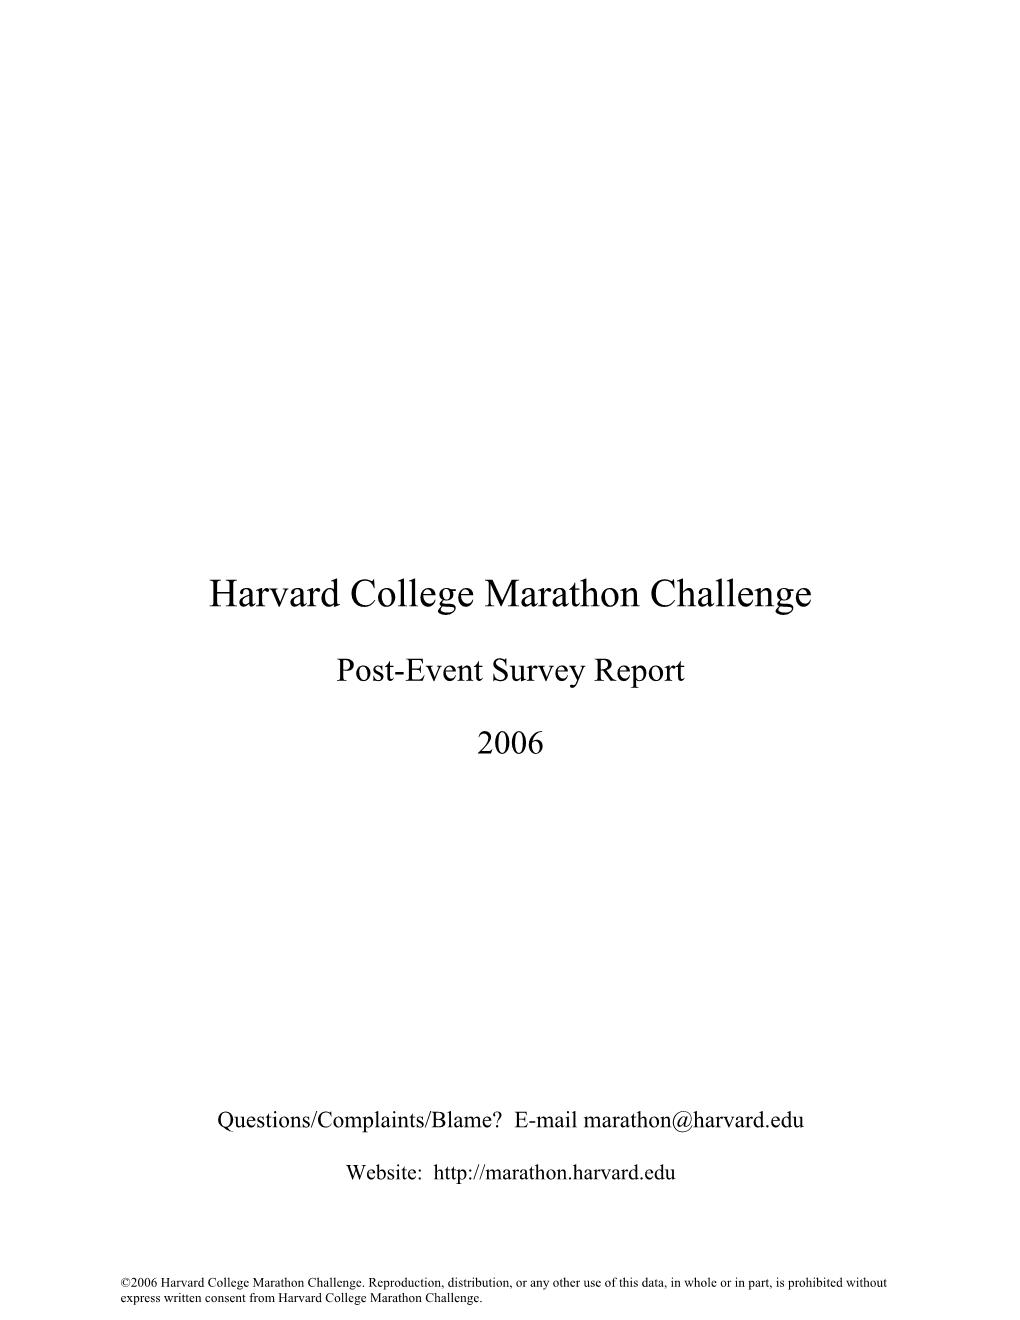 HCMC 2006 Survey Summary